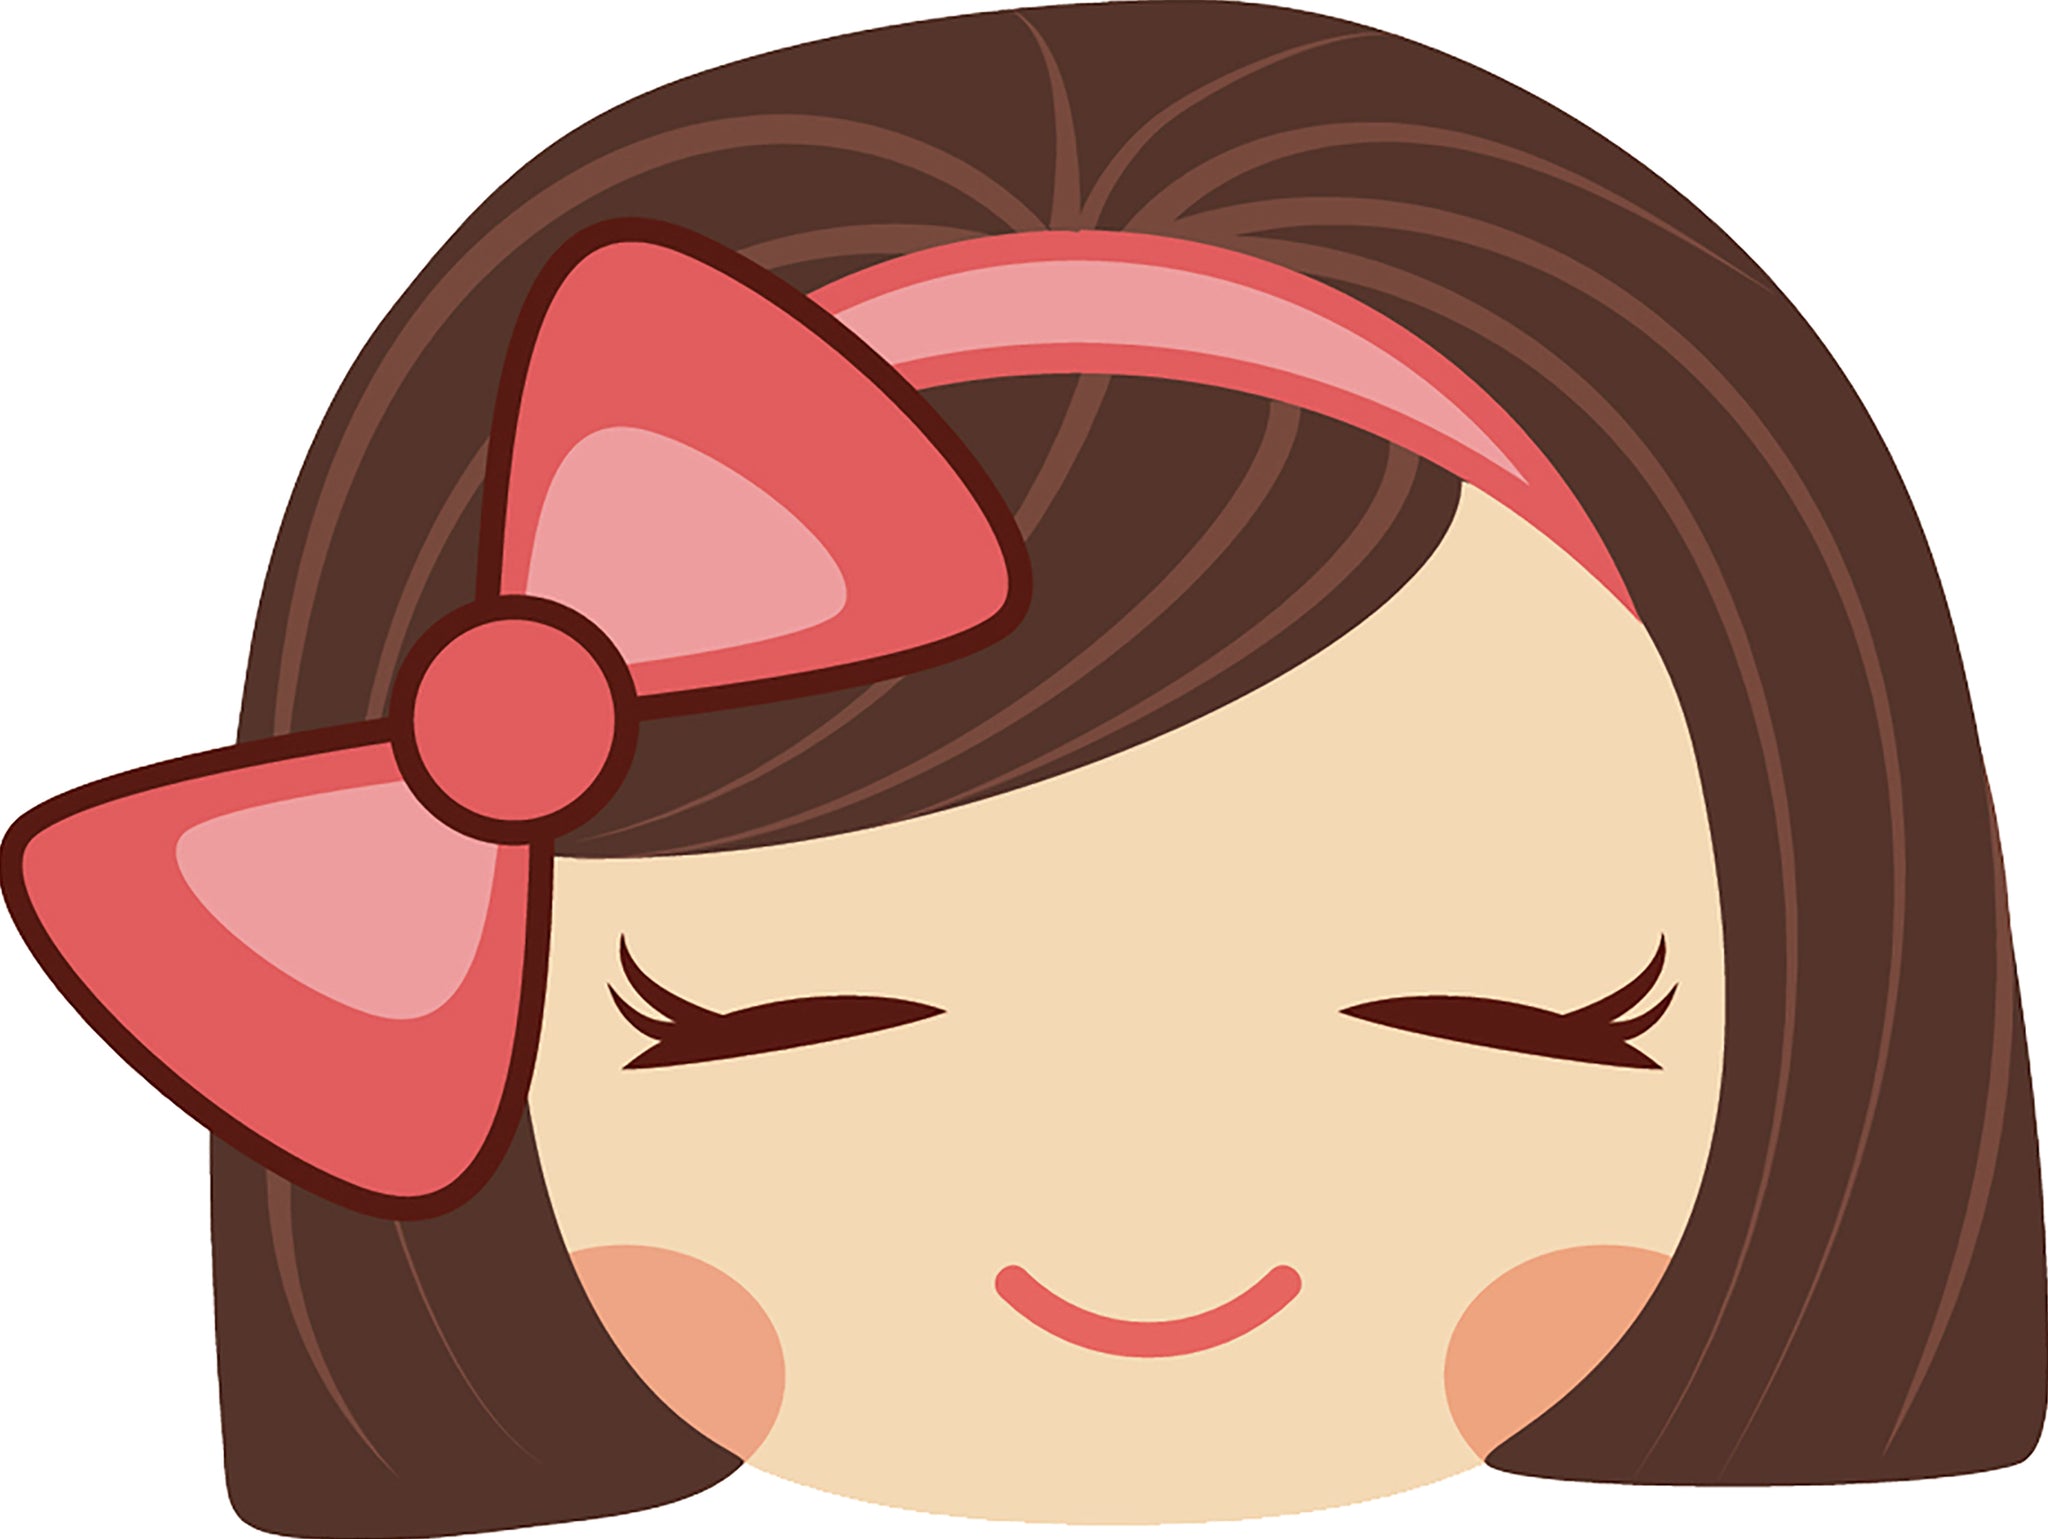 Sweet Little Kawaii School Girl with Pink Bow Emoji #2 Vinyl Decal Sticker